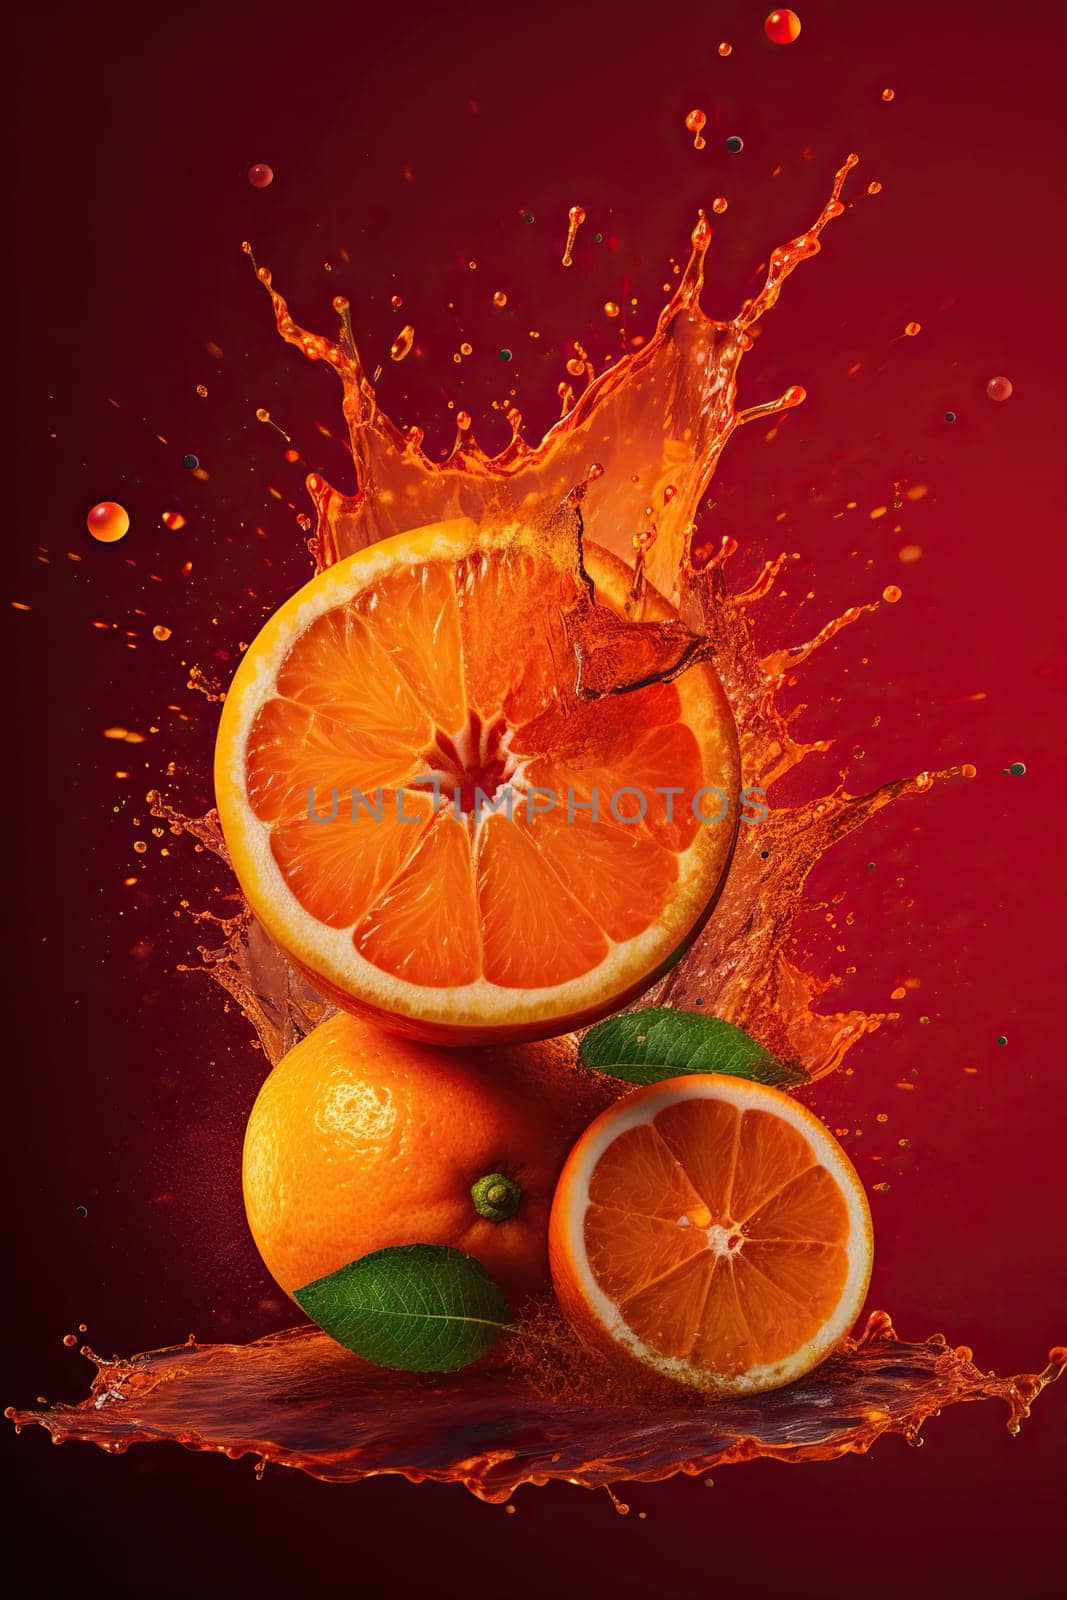 Juicy Orange Splashes And Juice Drops In Flight by tan4ikk1